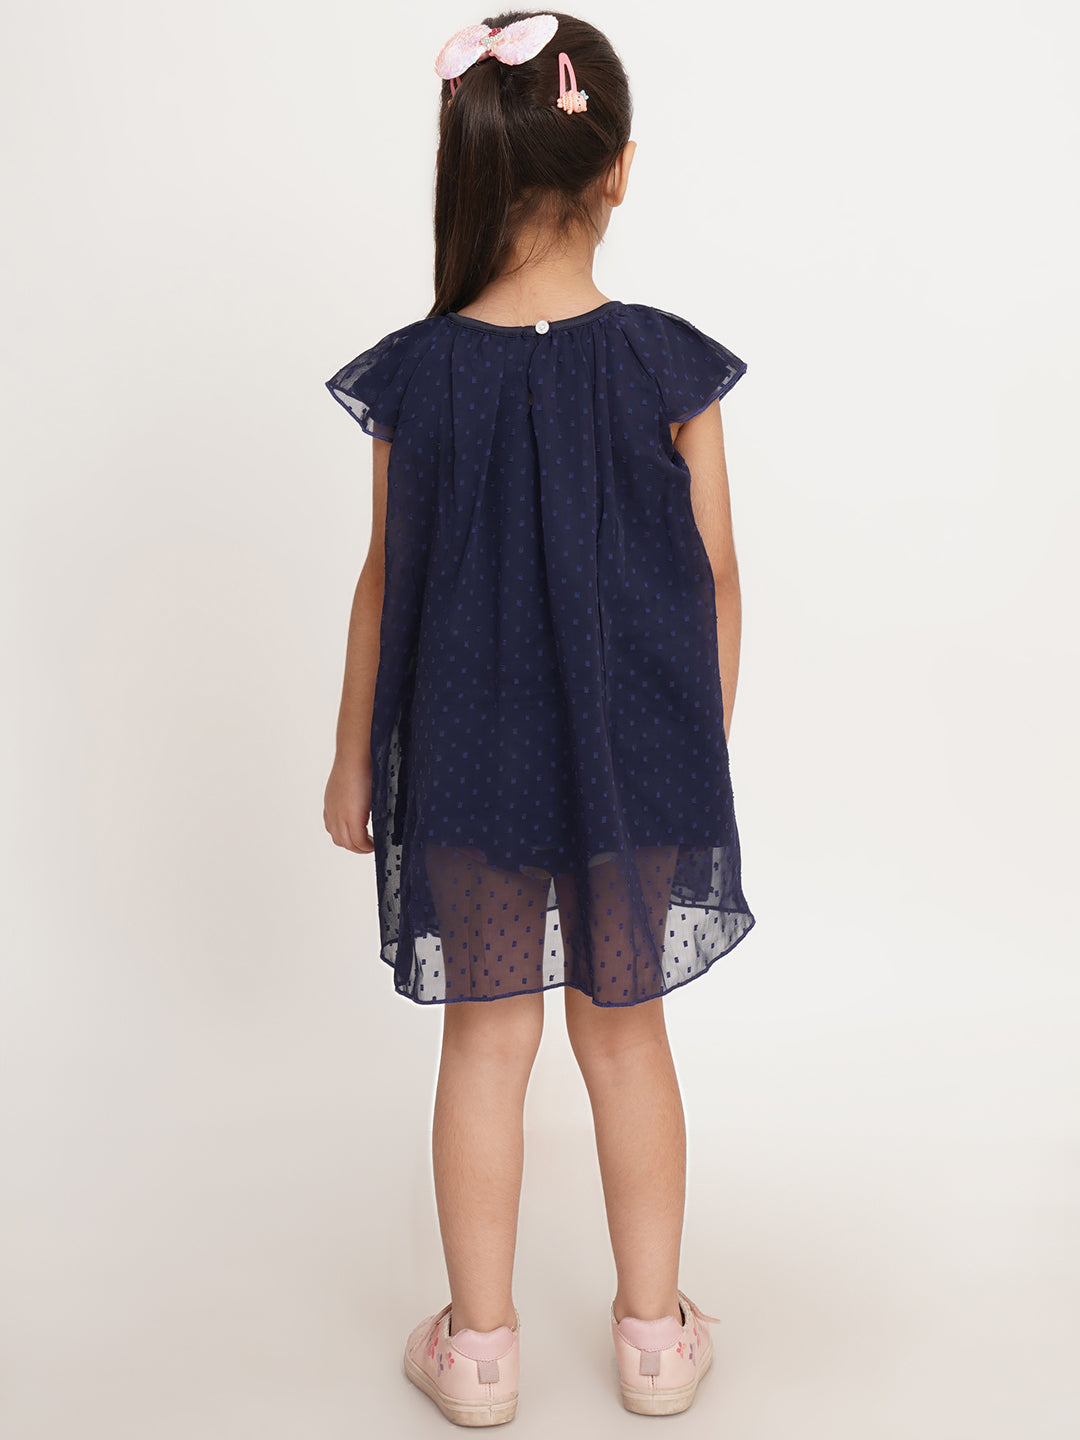 CREATIVE KID'S Girl Navy Blue Swiss-Dot Print A-Line Dress